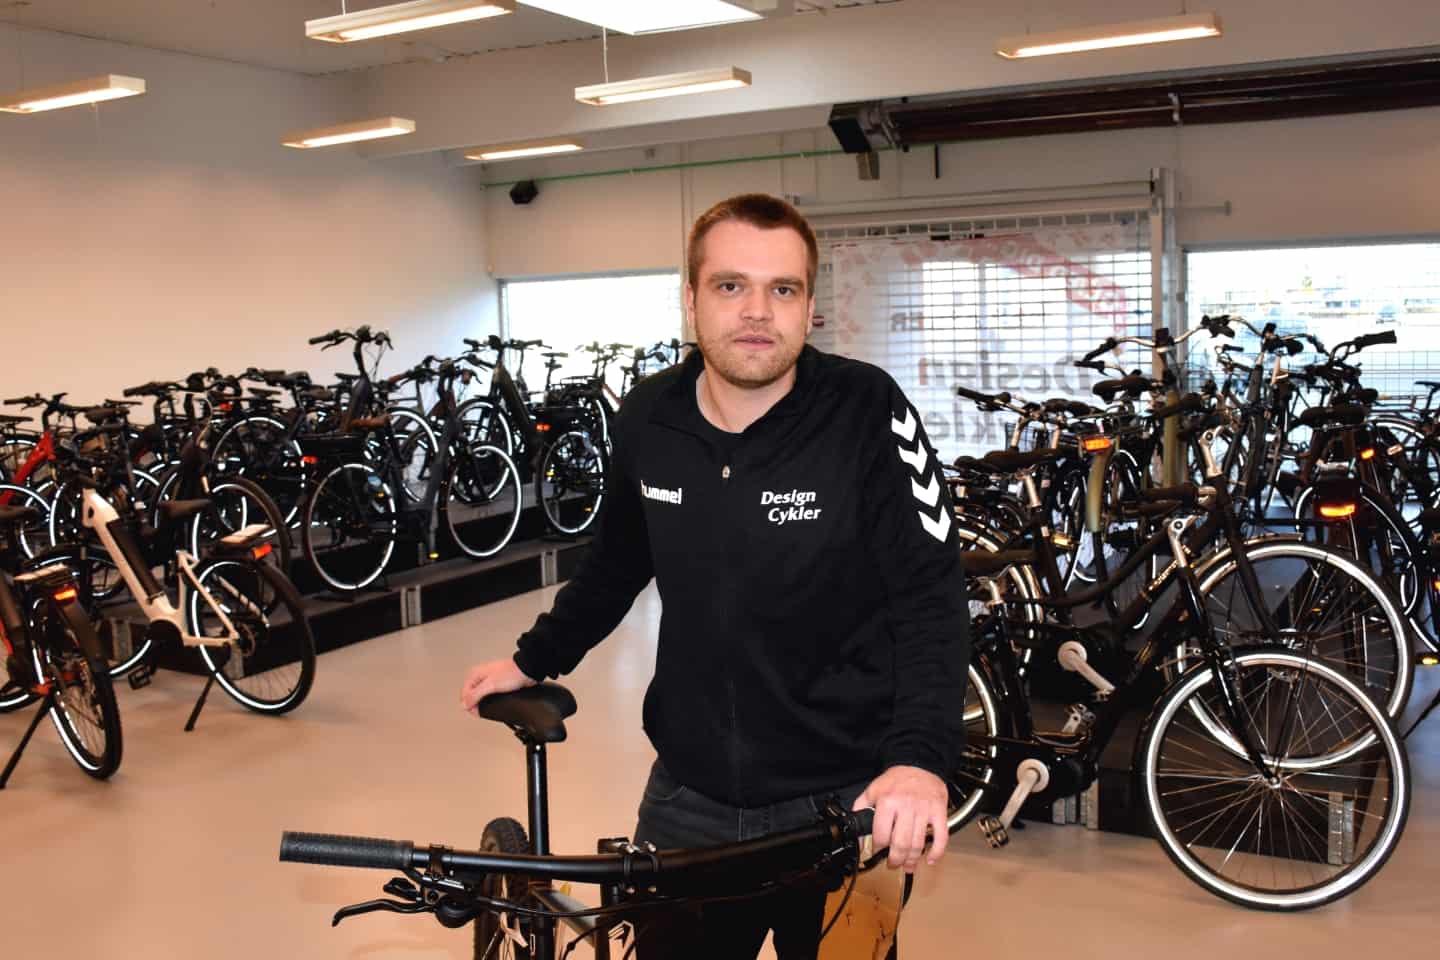 ruller bare derudad: Torsdag får Viborg en ny, stor cykelforhandler | ugeavisen.dk